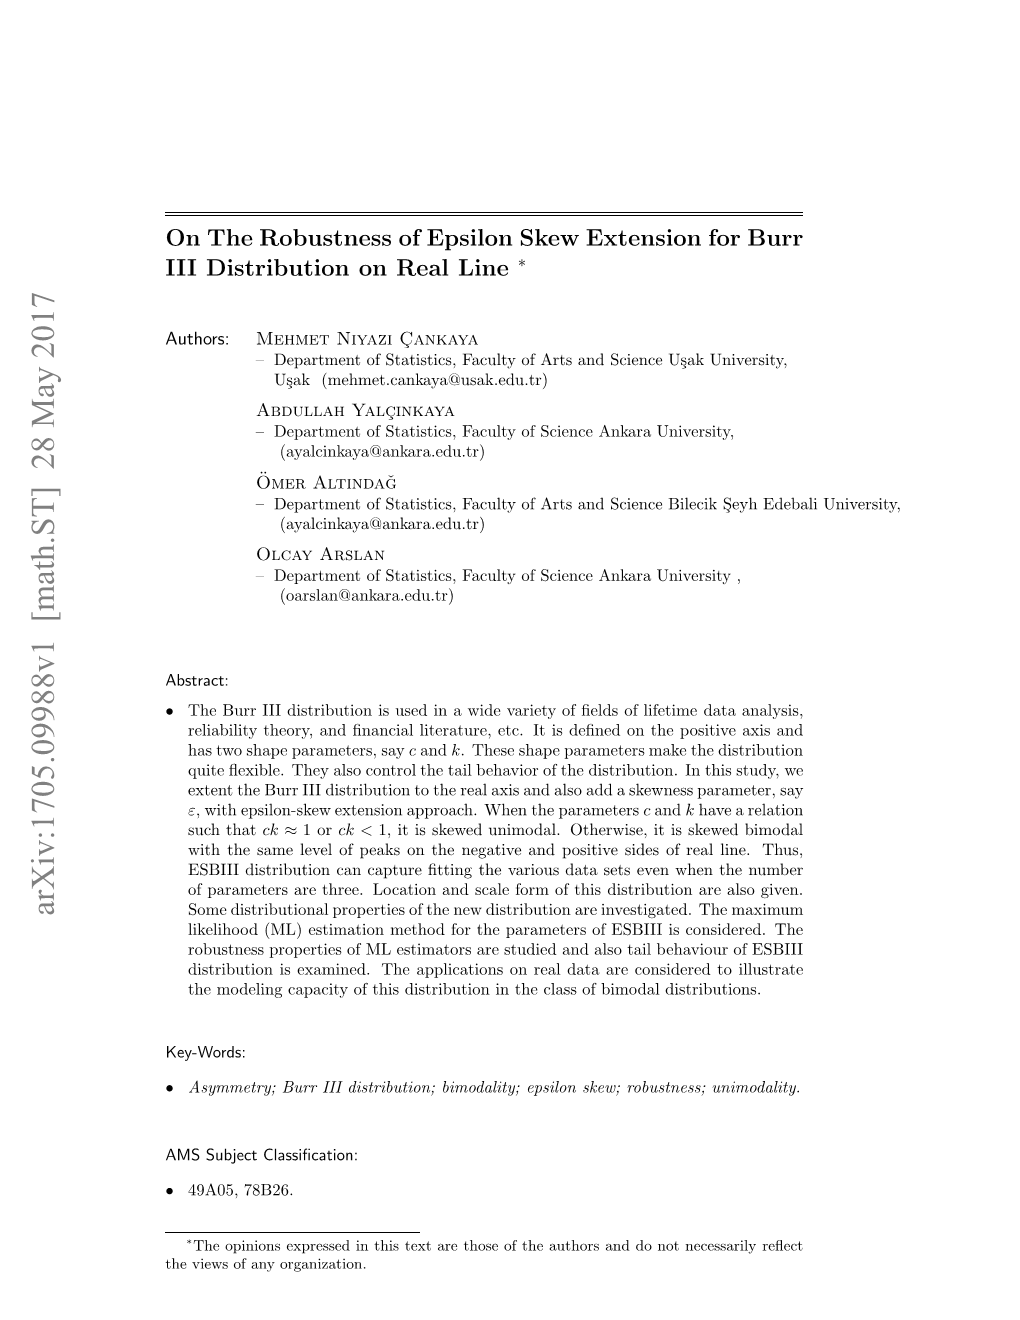 On the Robustness of Epsilon Skew Extension for Burr III Distribution on Real Line